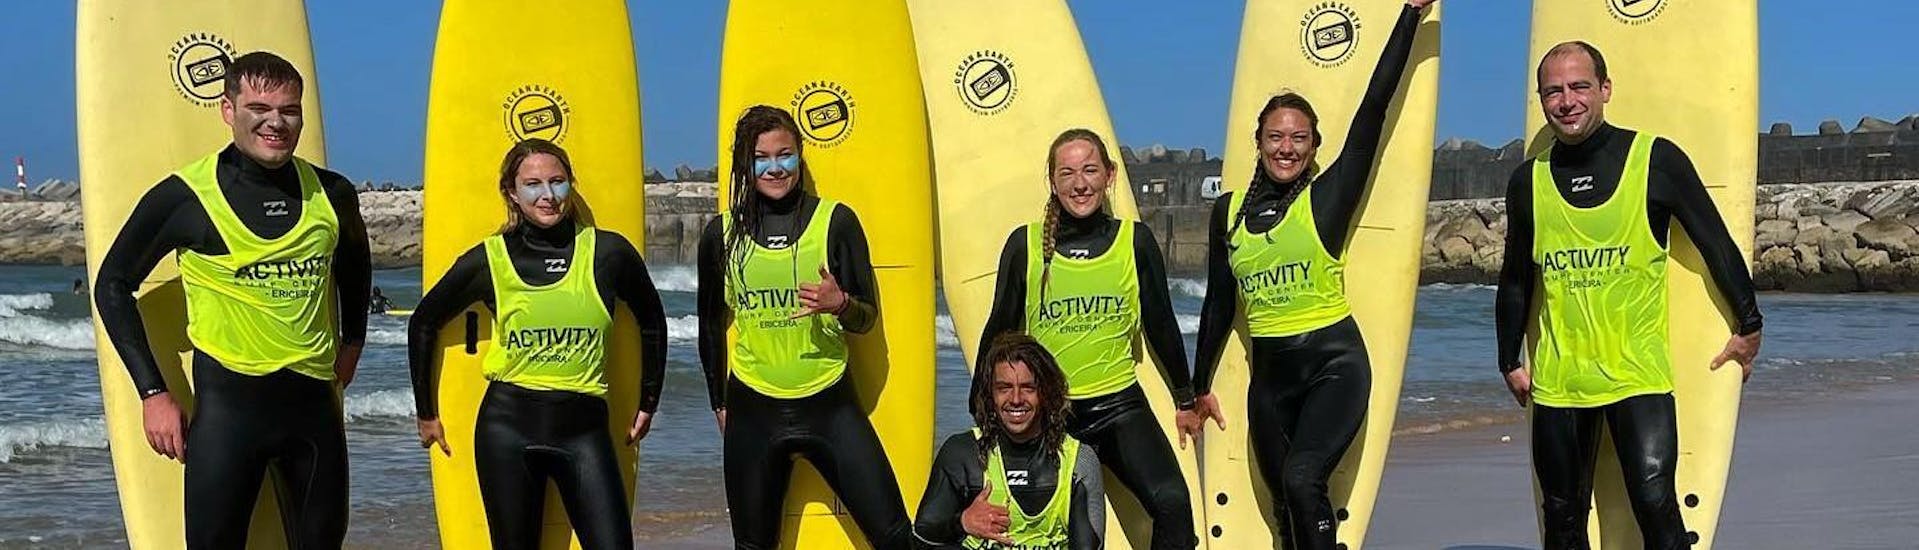 Algunos participantes de las clases de surf del Activity Surf Center de Ericeira.